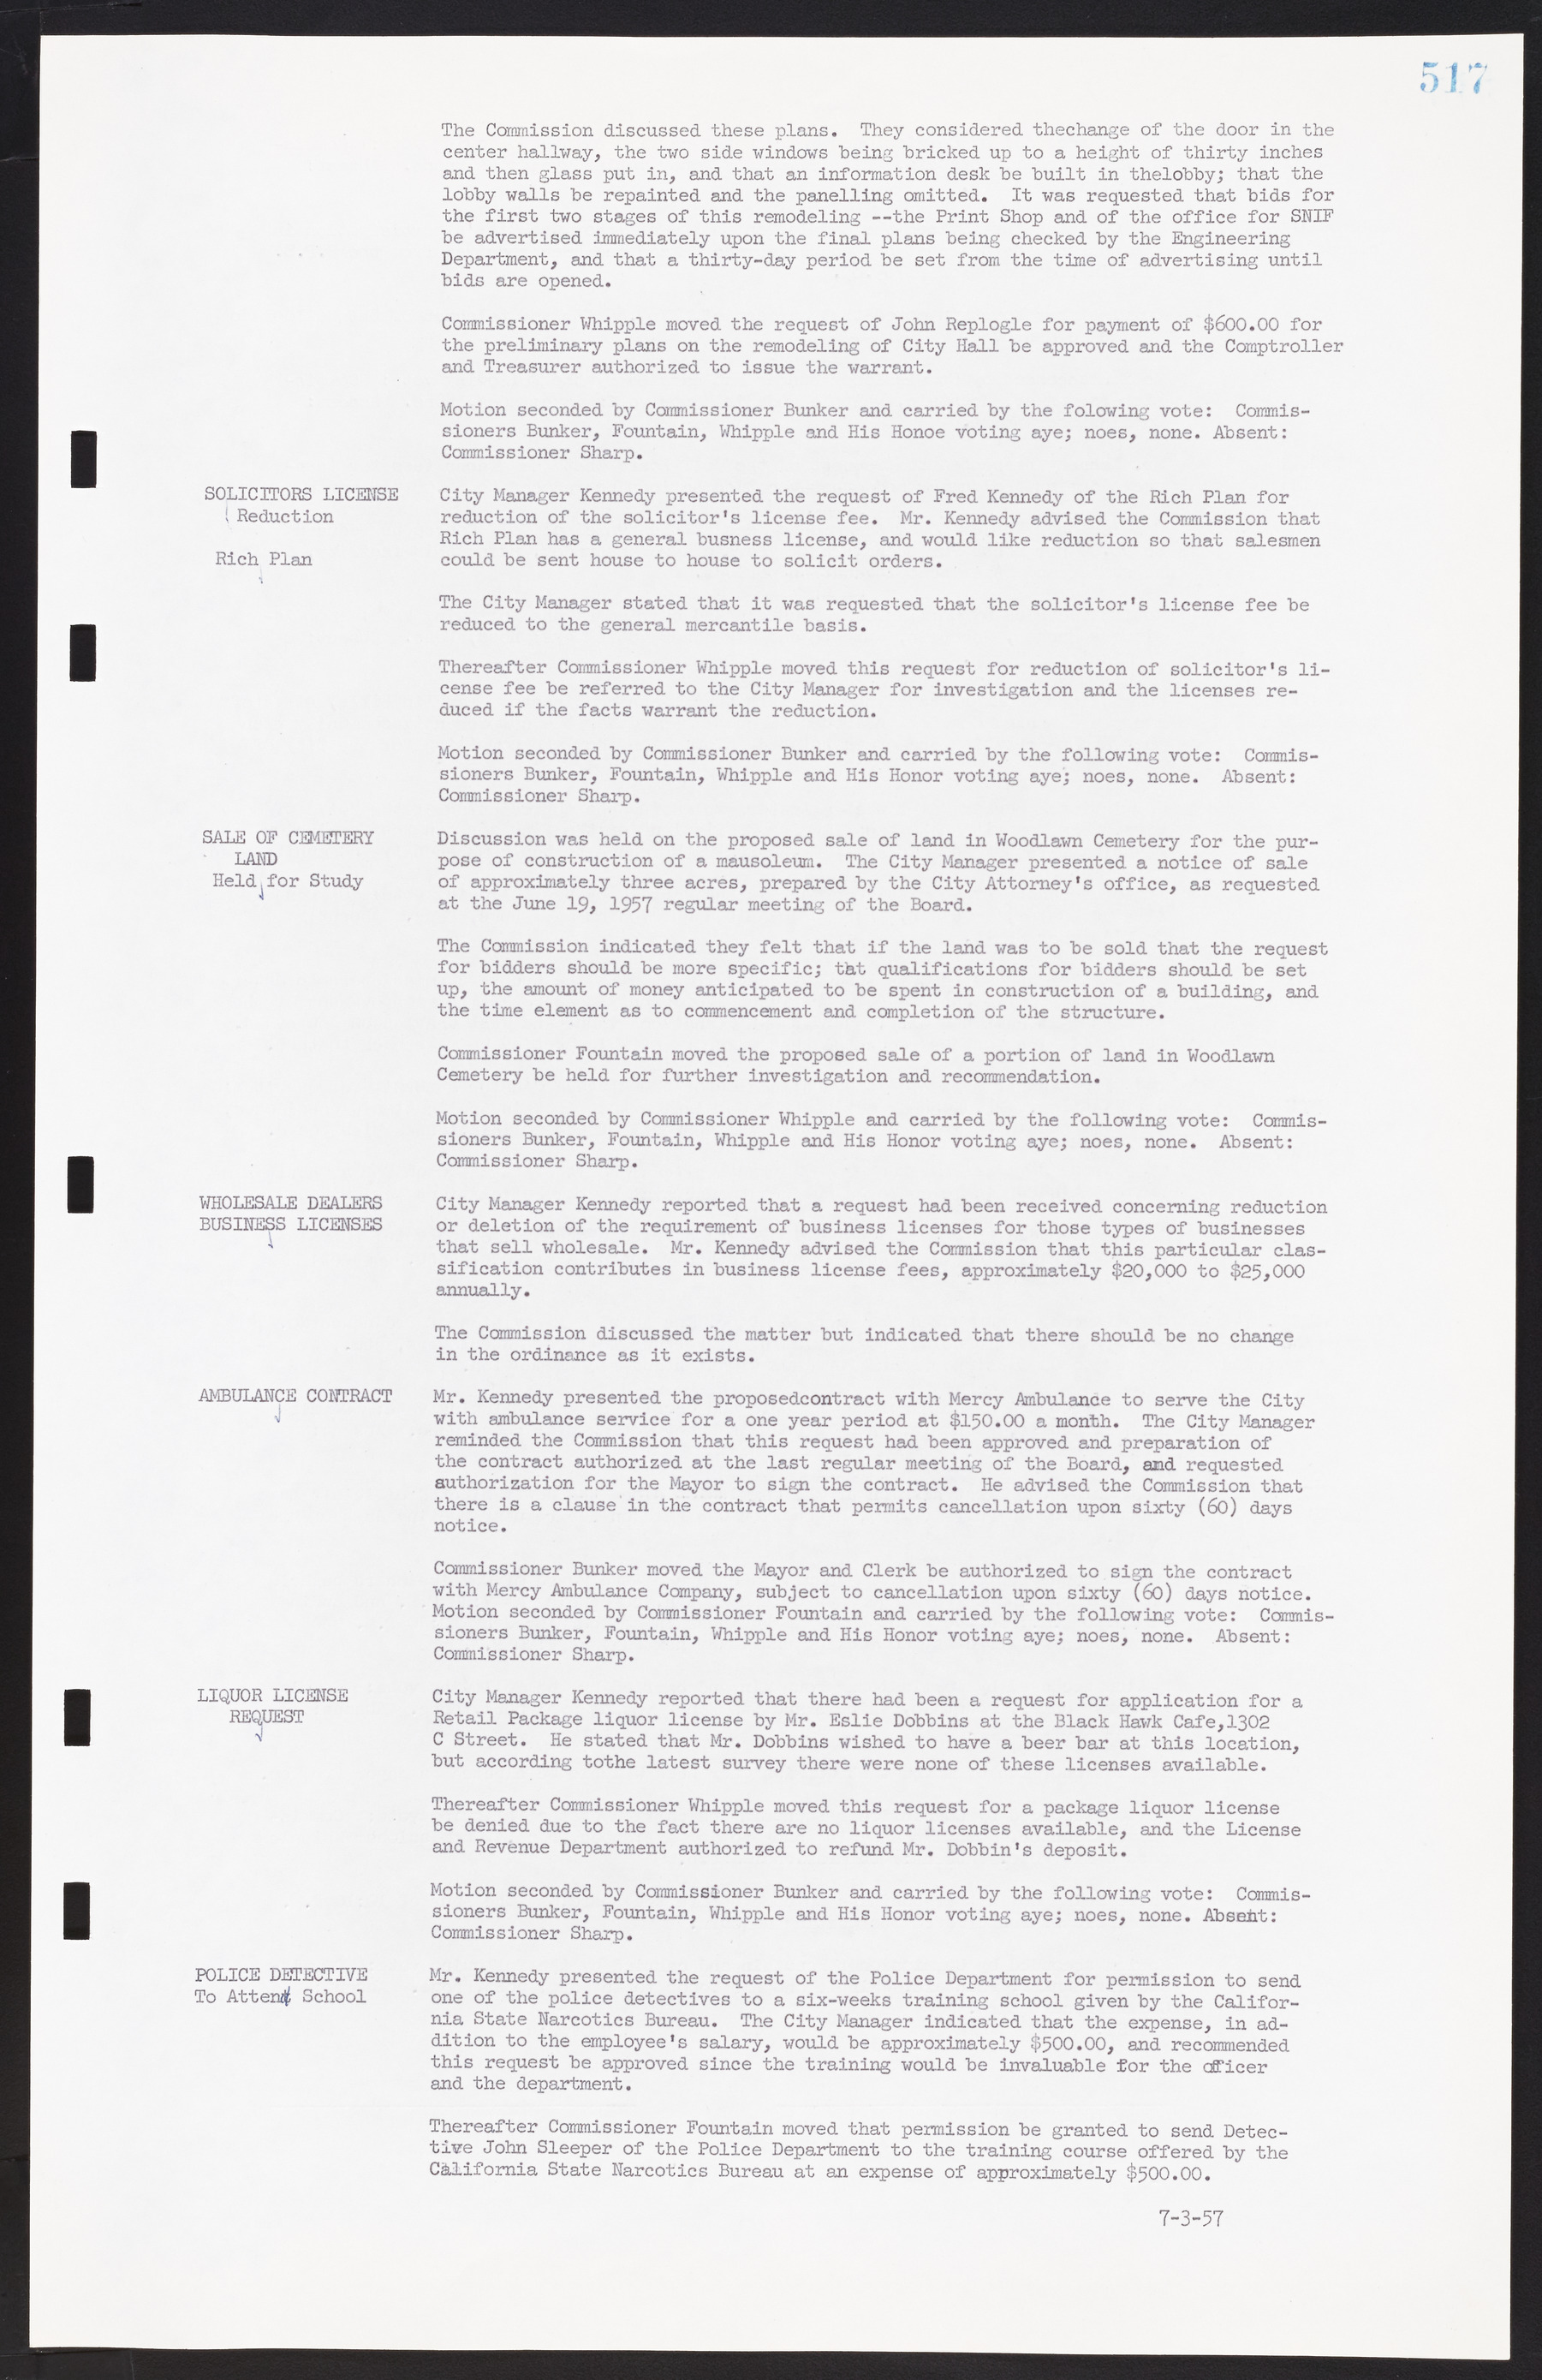 Las Vegas City Commission Minutes, September 21, 1955 to November 20, 1957, lvc000010-537